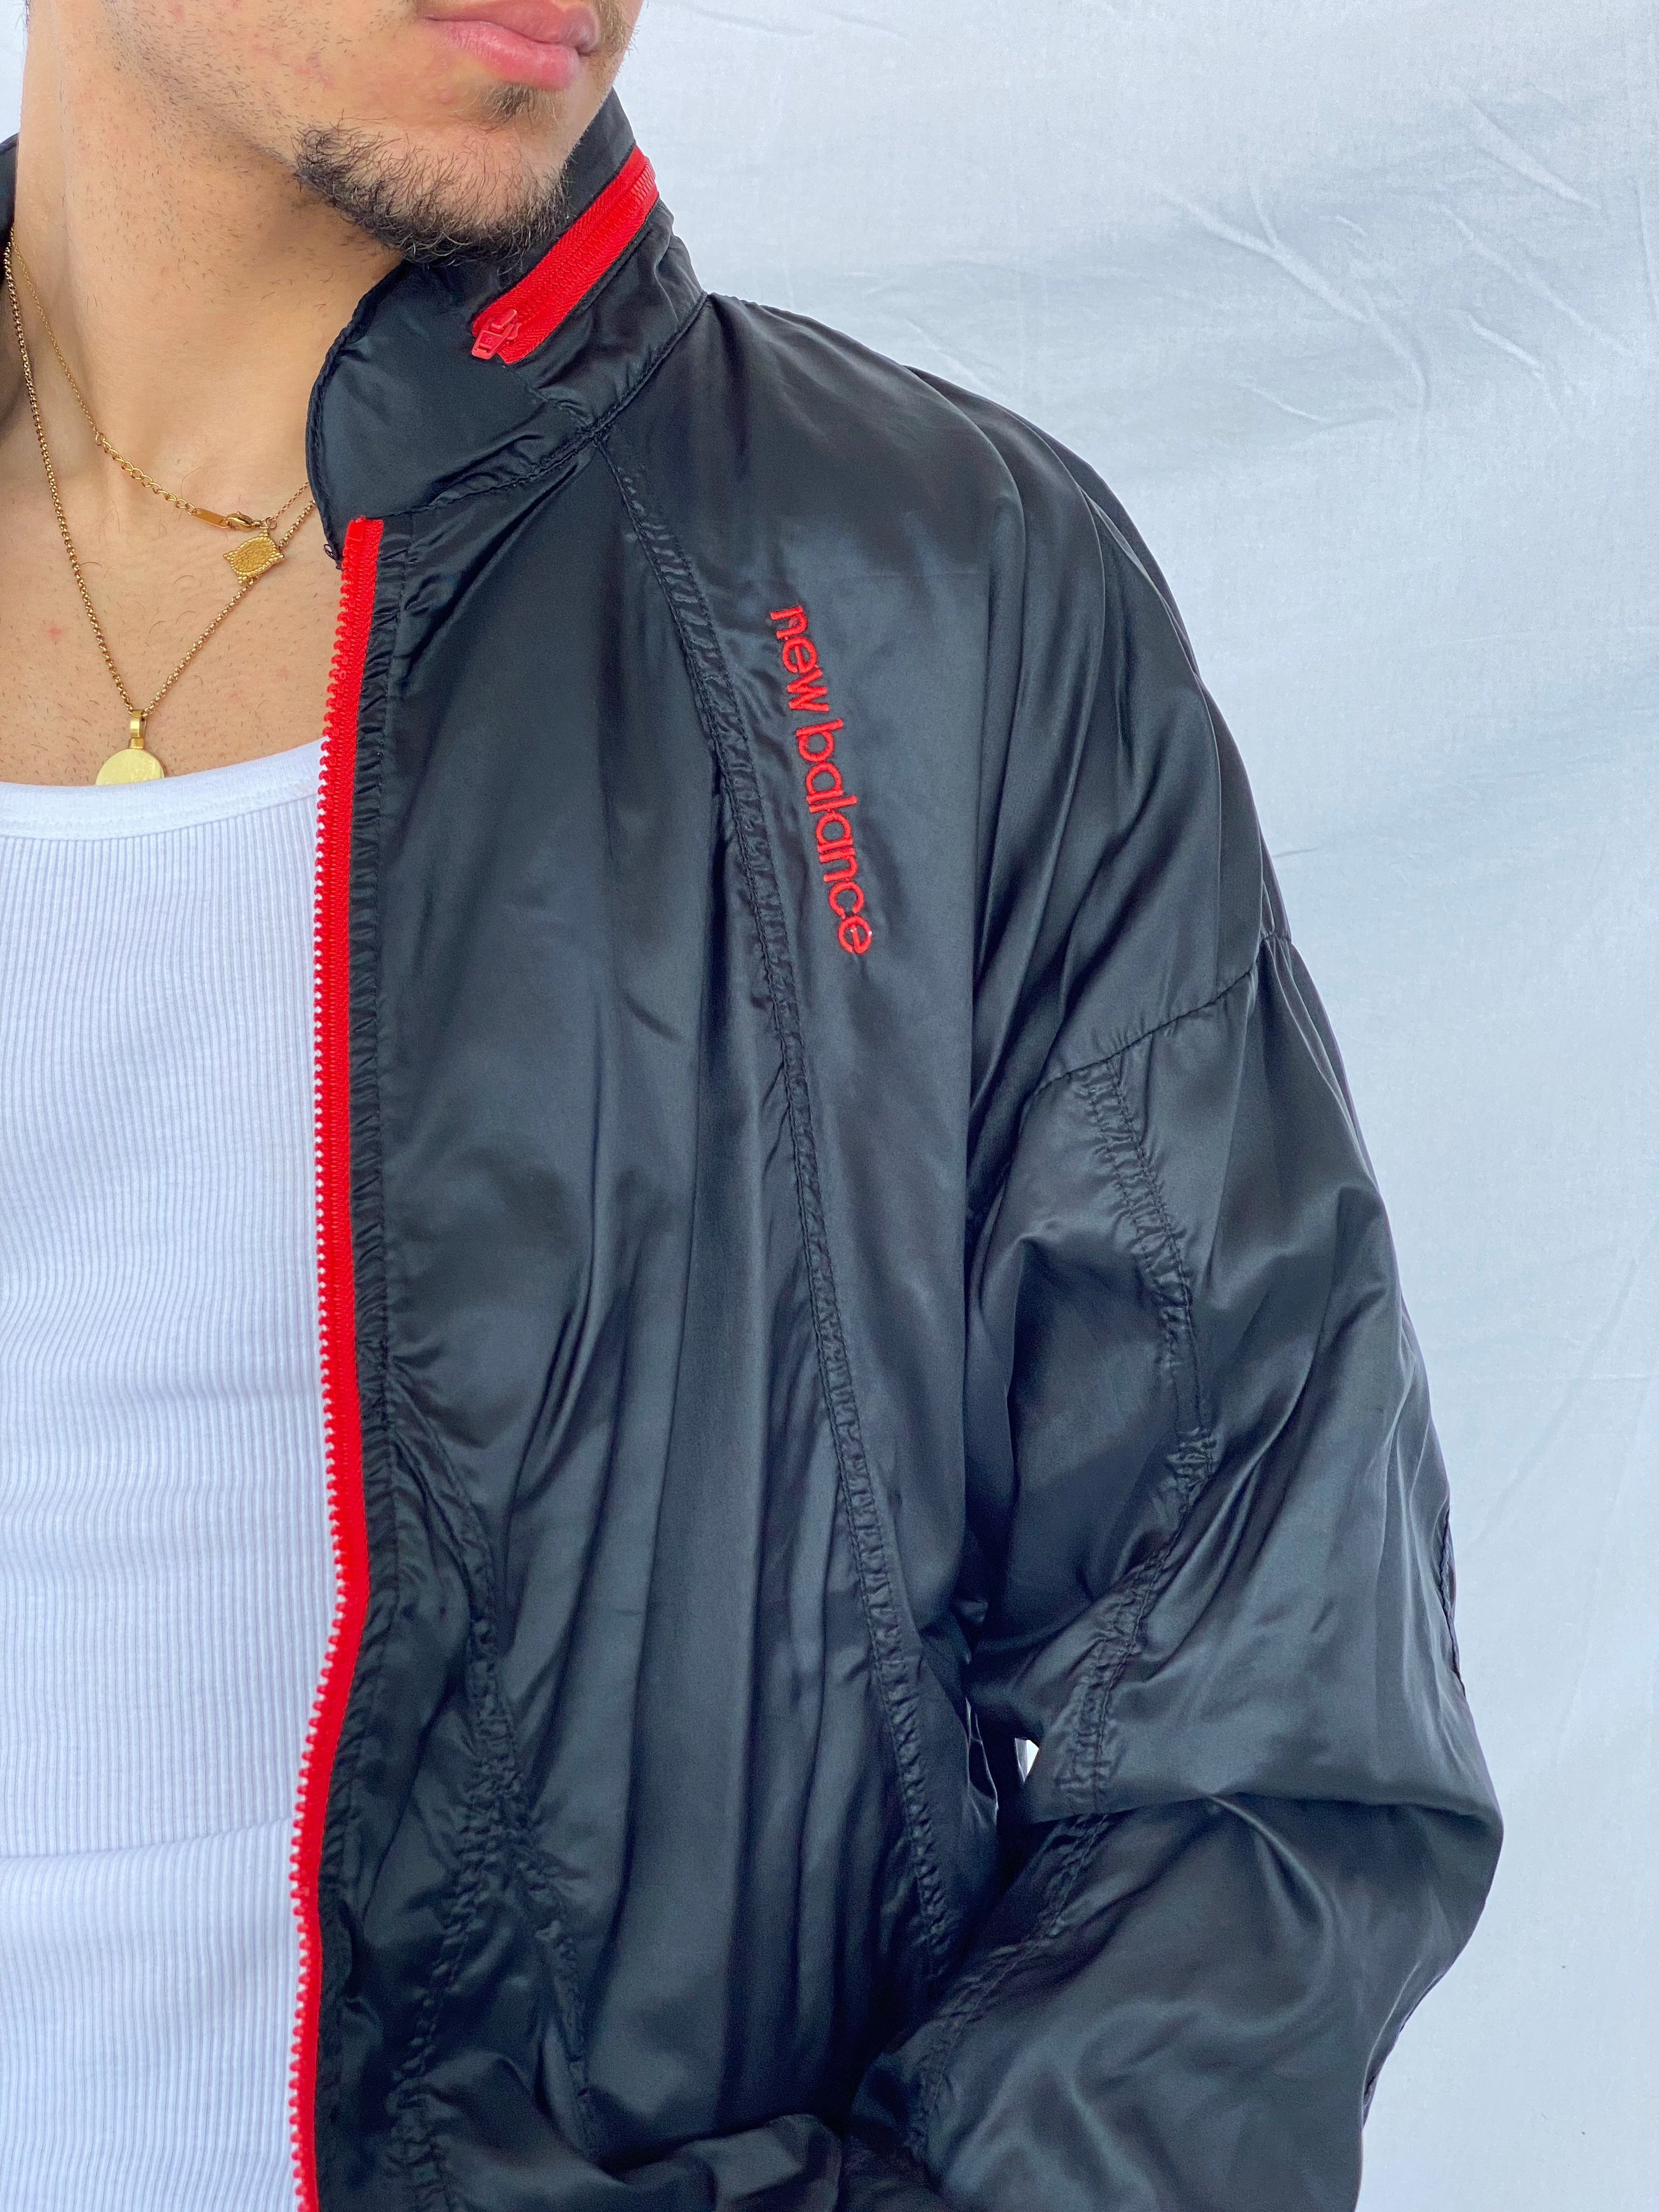 New Balance Windbreaker Jacket - Balagan Vintage Windbreaker Jacket 90s, nylon, outerwear, vintage